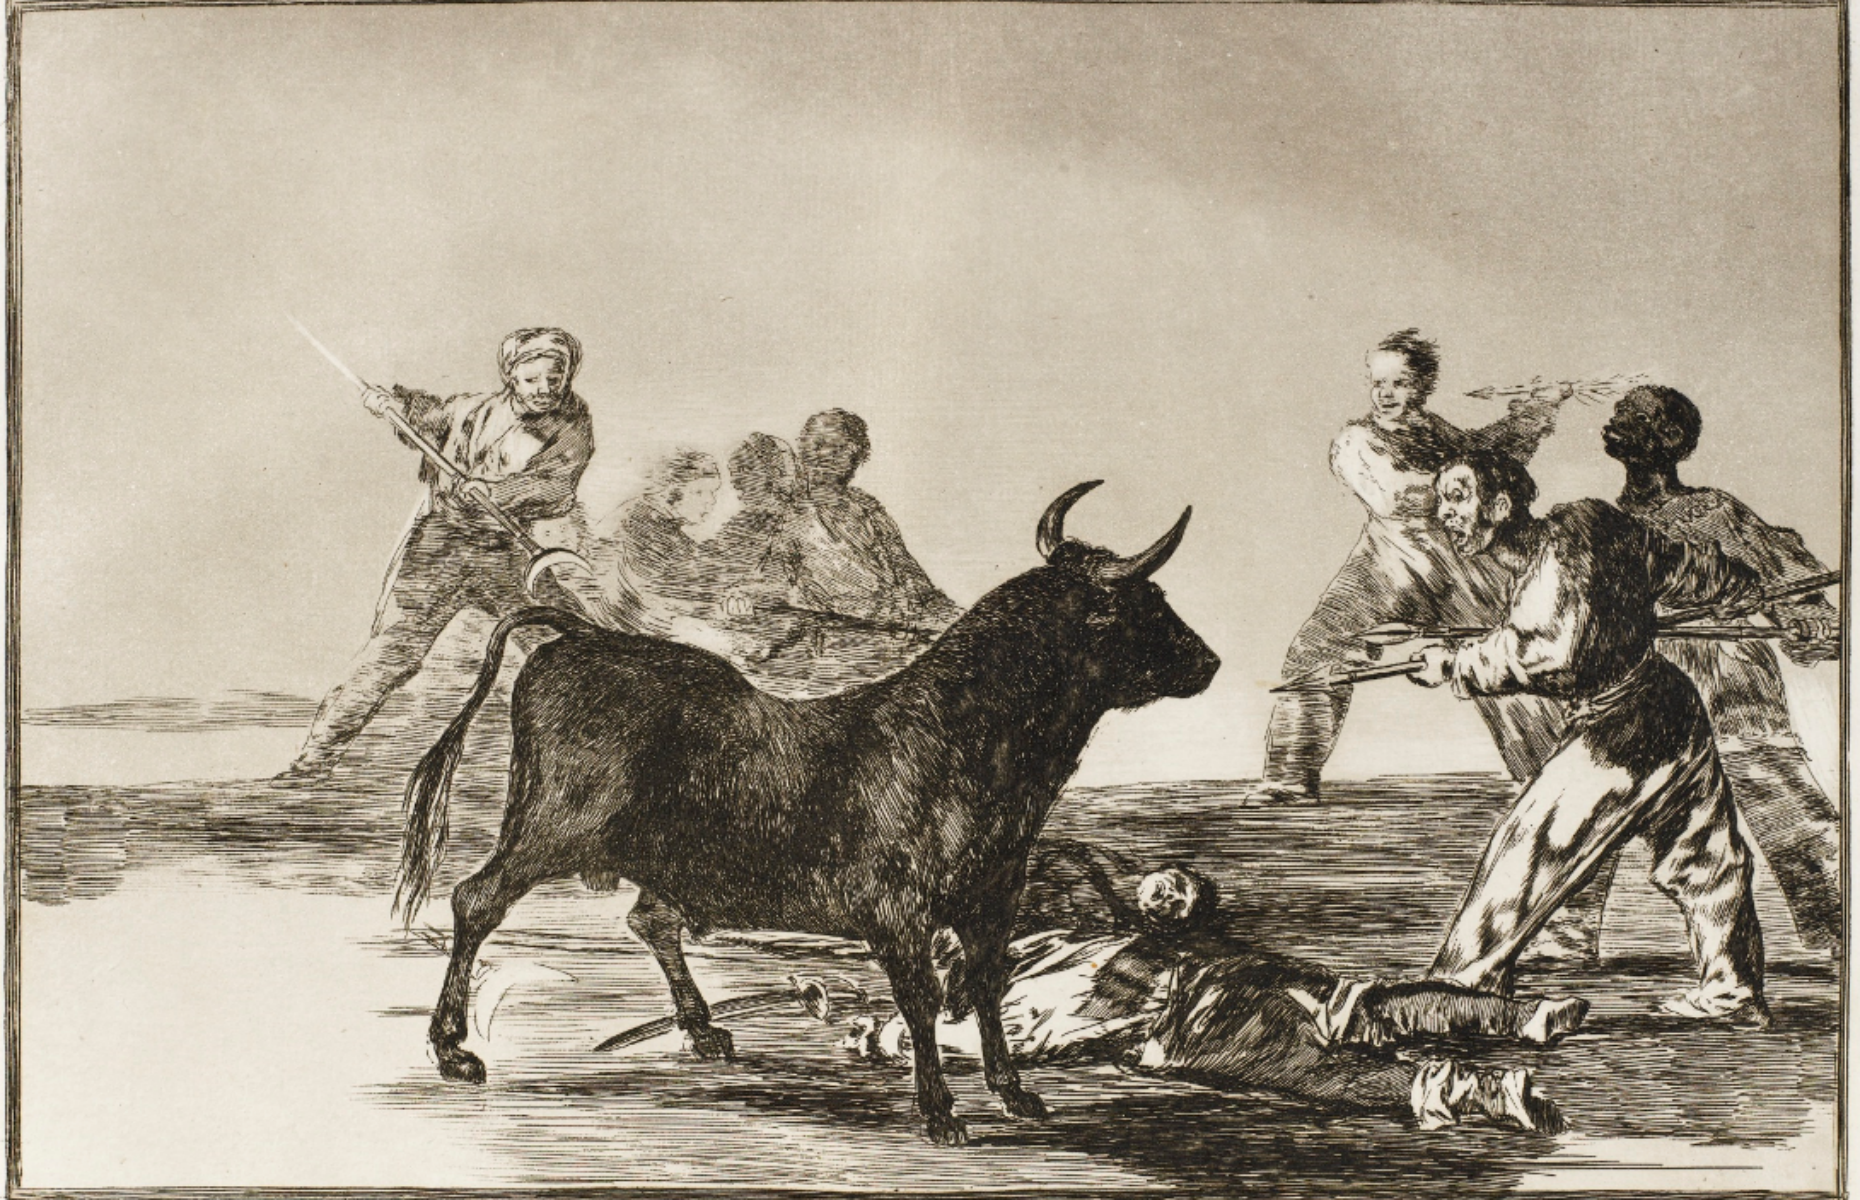 Francisco Goya etchngs